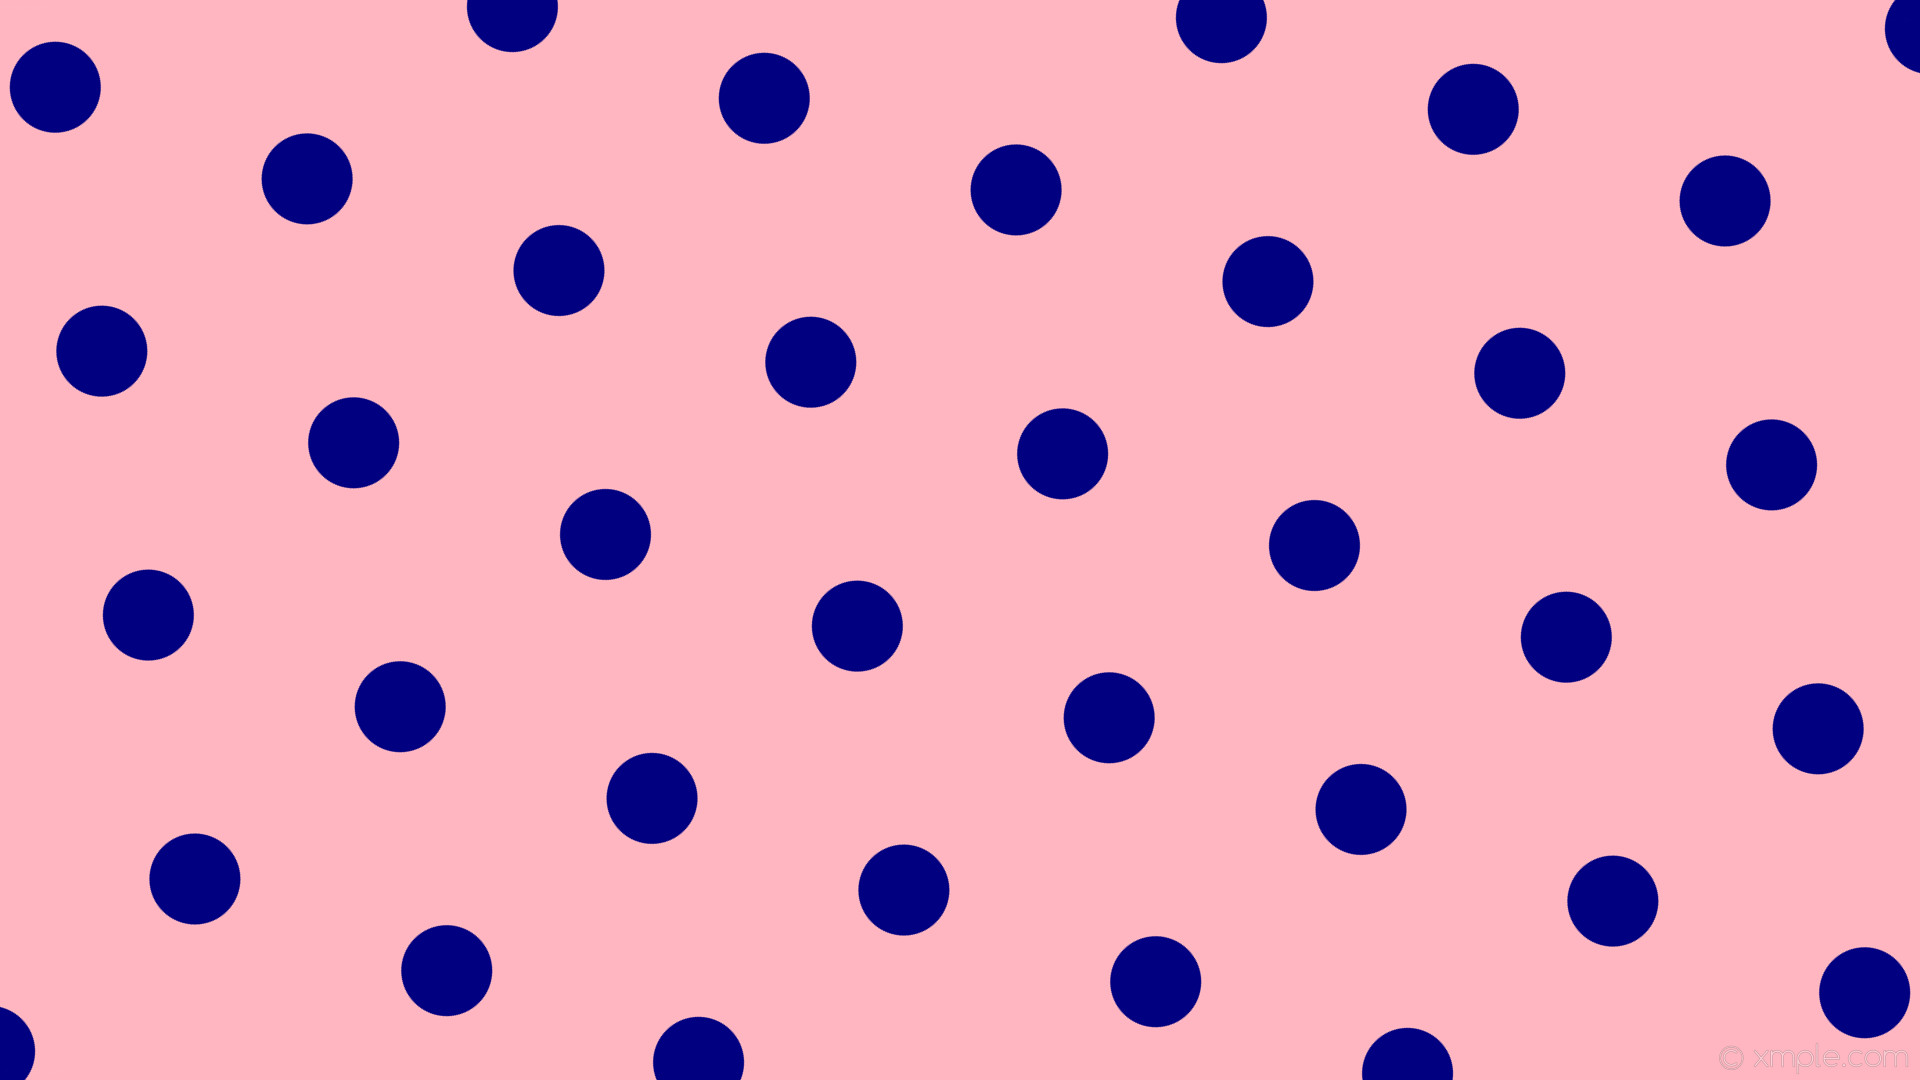 1920x1080 wallpaper dots pink polka hexagon blue light pink navy #ffb6c1 #000080  diagonal 40Â°